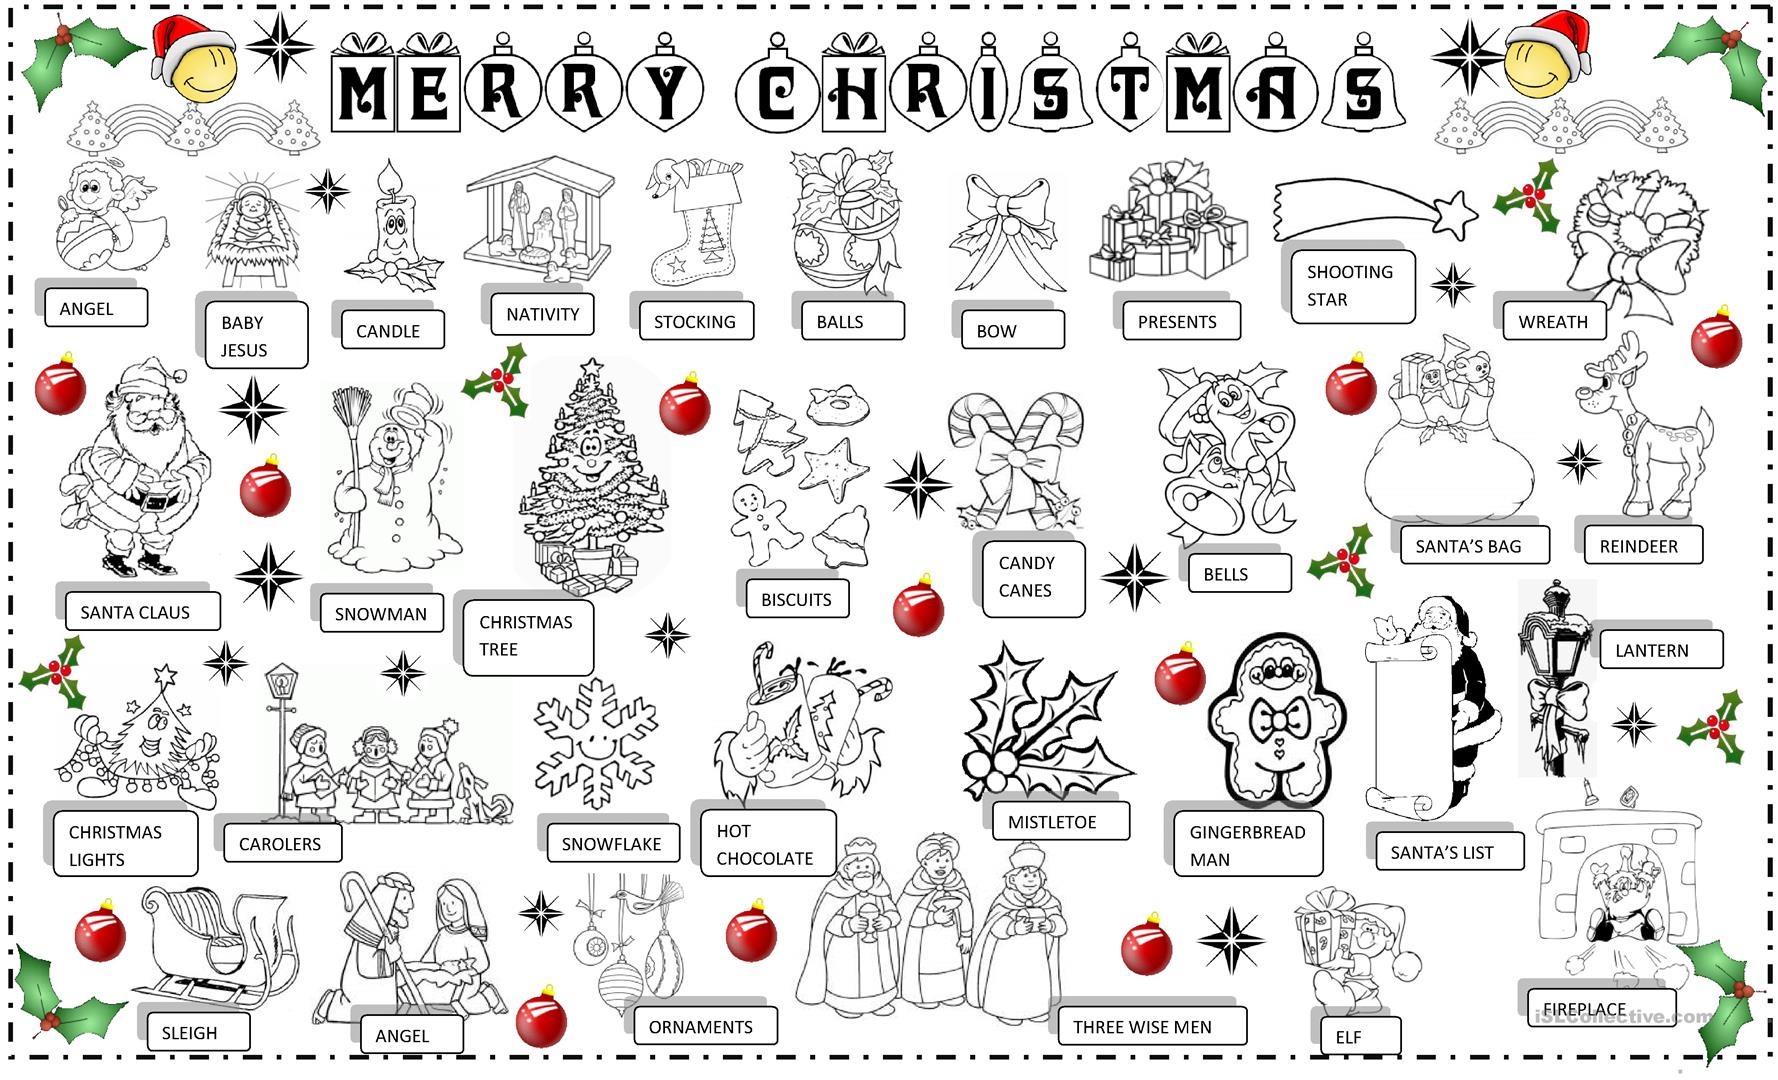 Christmas Pictionary Worksheet - Free Esl Printable Worksheets Made - Free Printable Christmas Pictionary Words